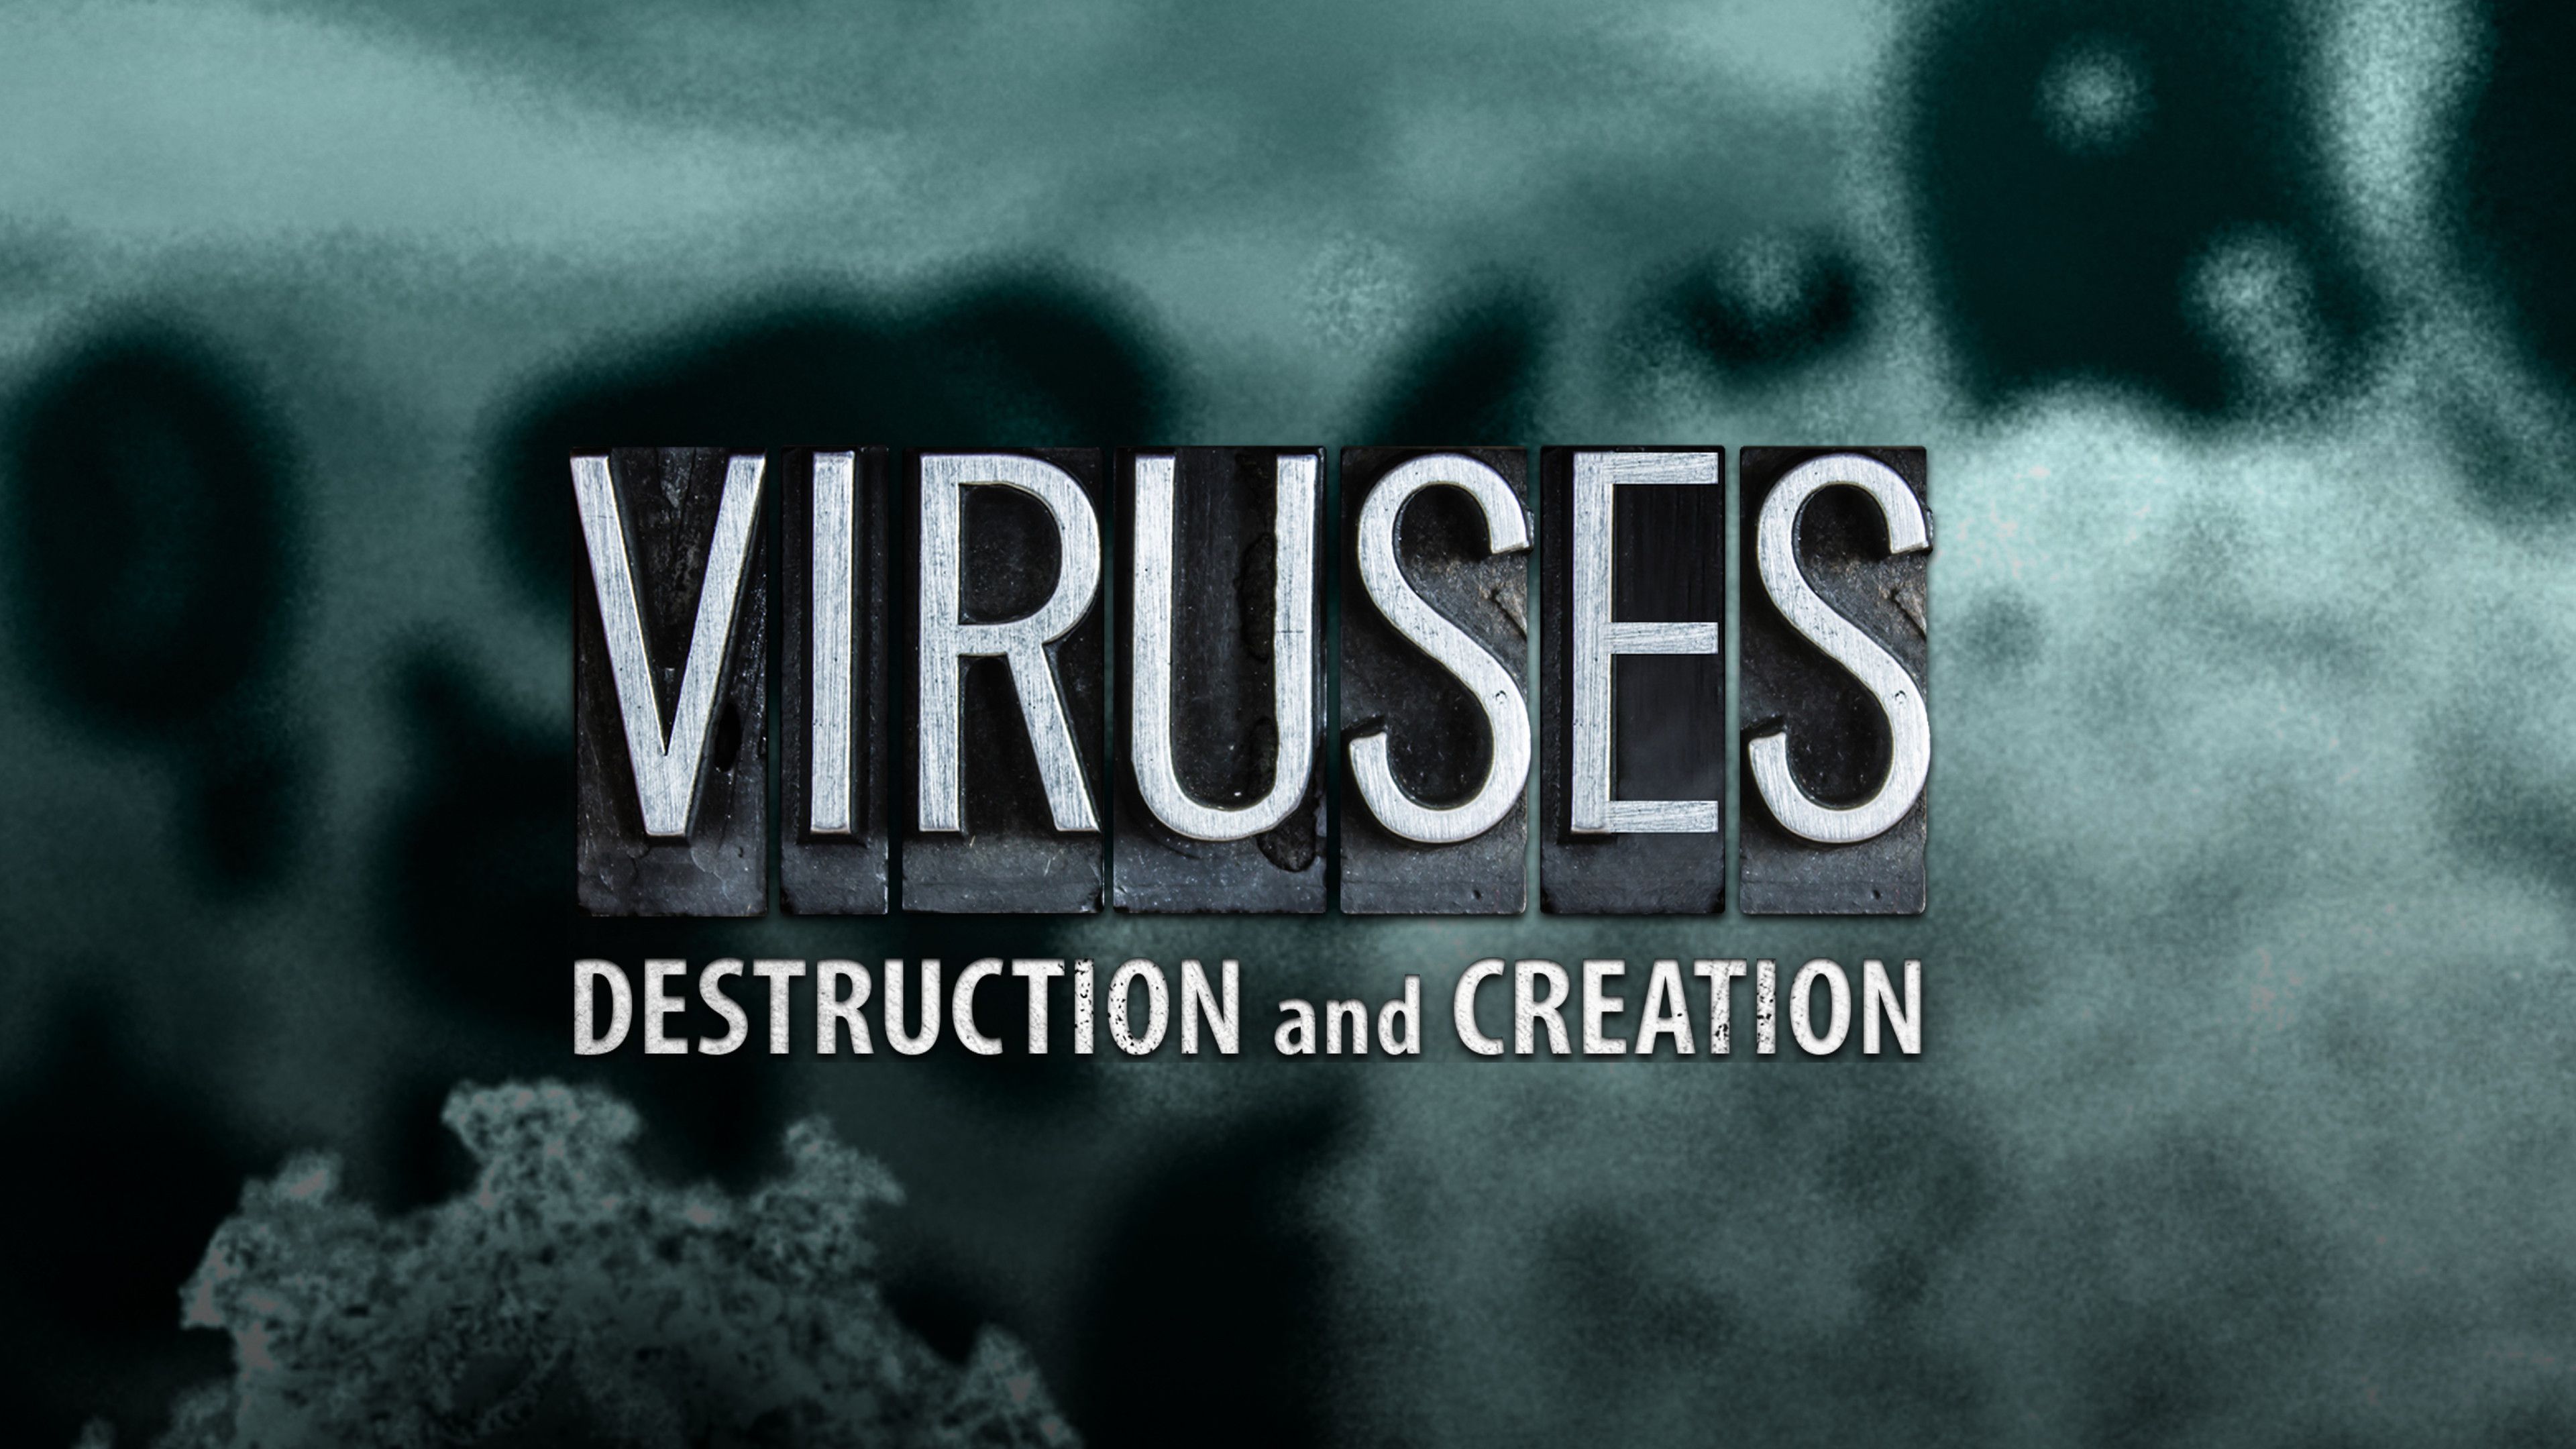 Viruses: Destruction And Creation